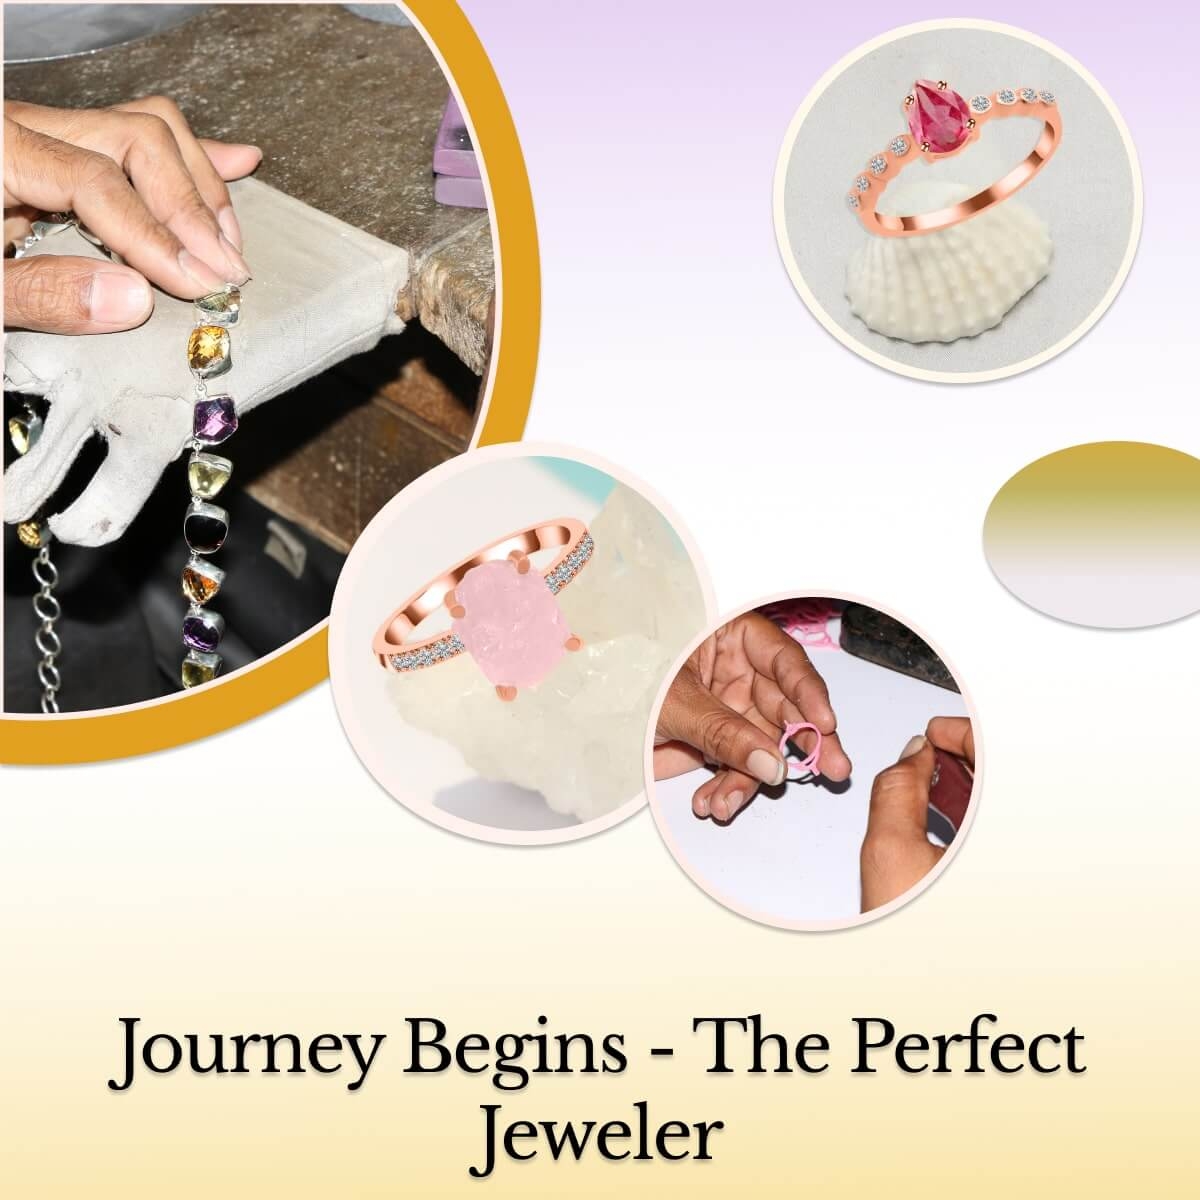 Choosing the Right Jeweler